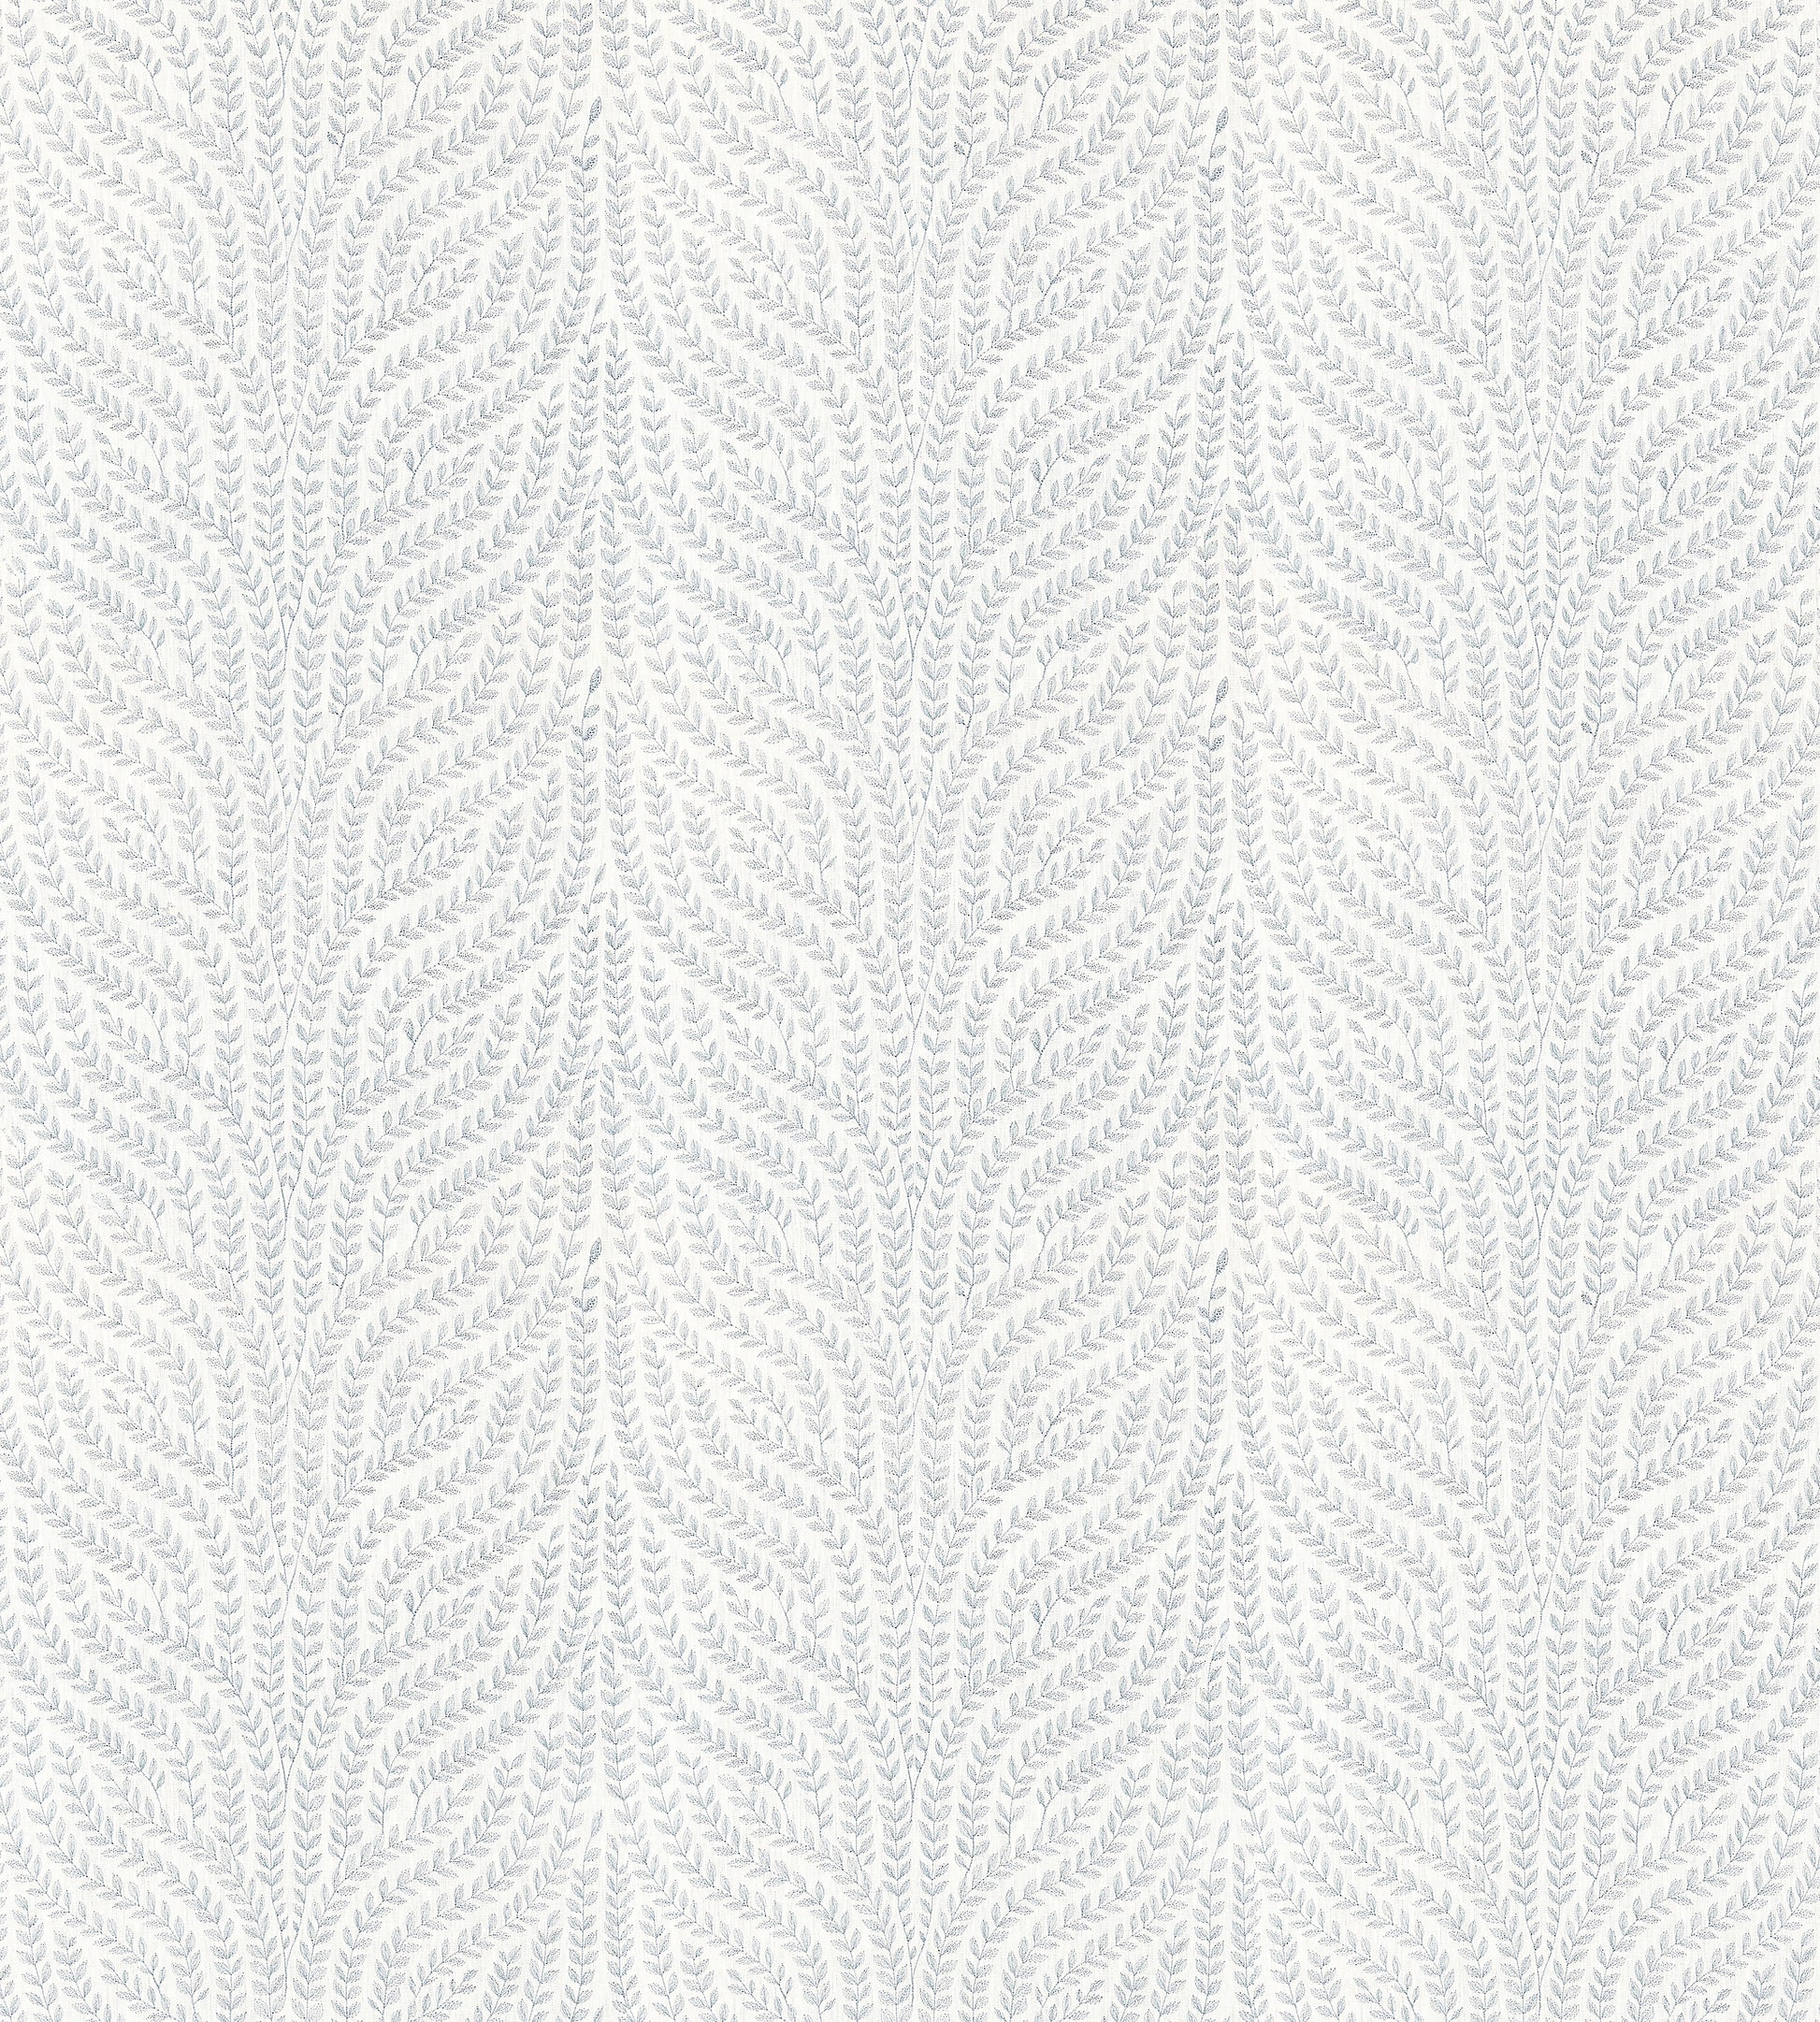 Purchase Scalamandre Fabric Pattern# SC 000127125, Willow Vine Embroidery Aquamarine 4